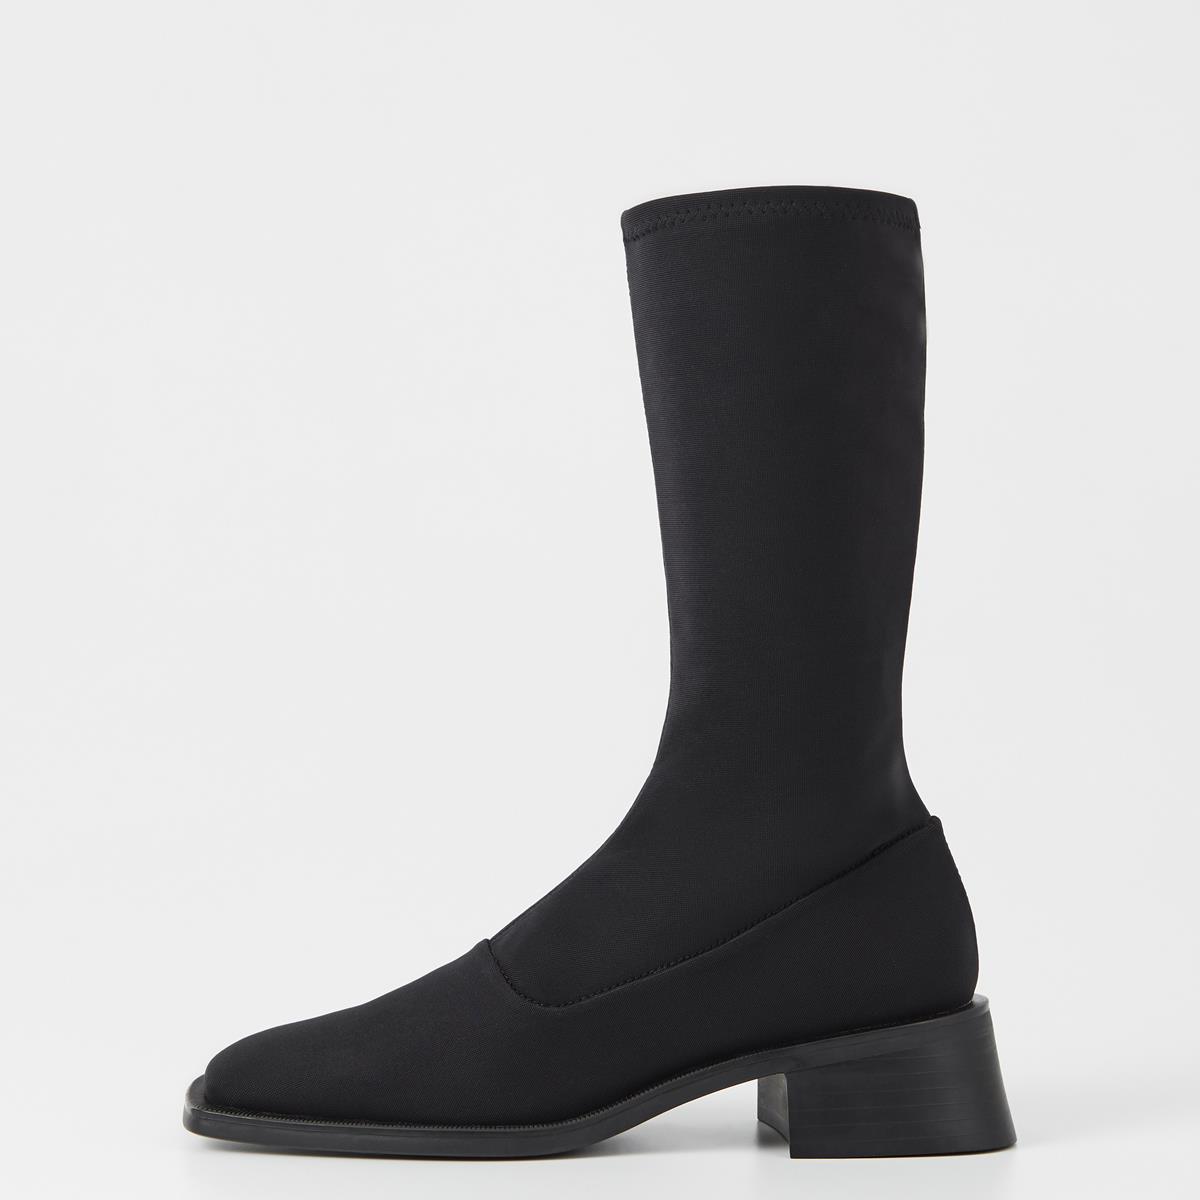 Blanca - Black Boots Woman | Vagabond